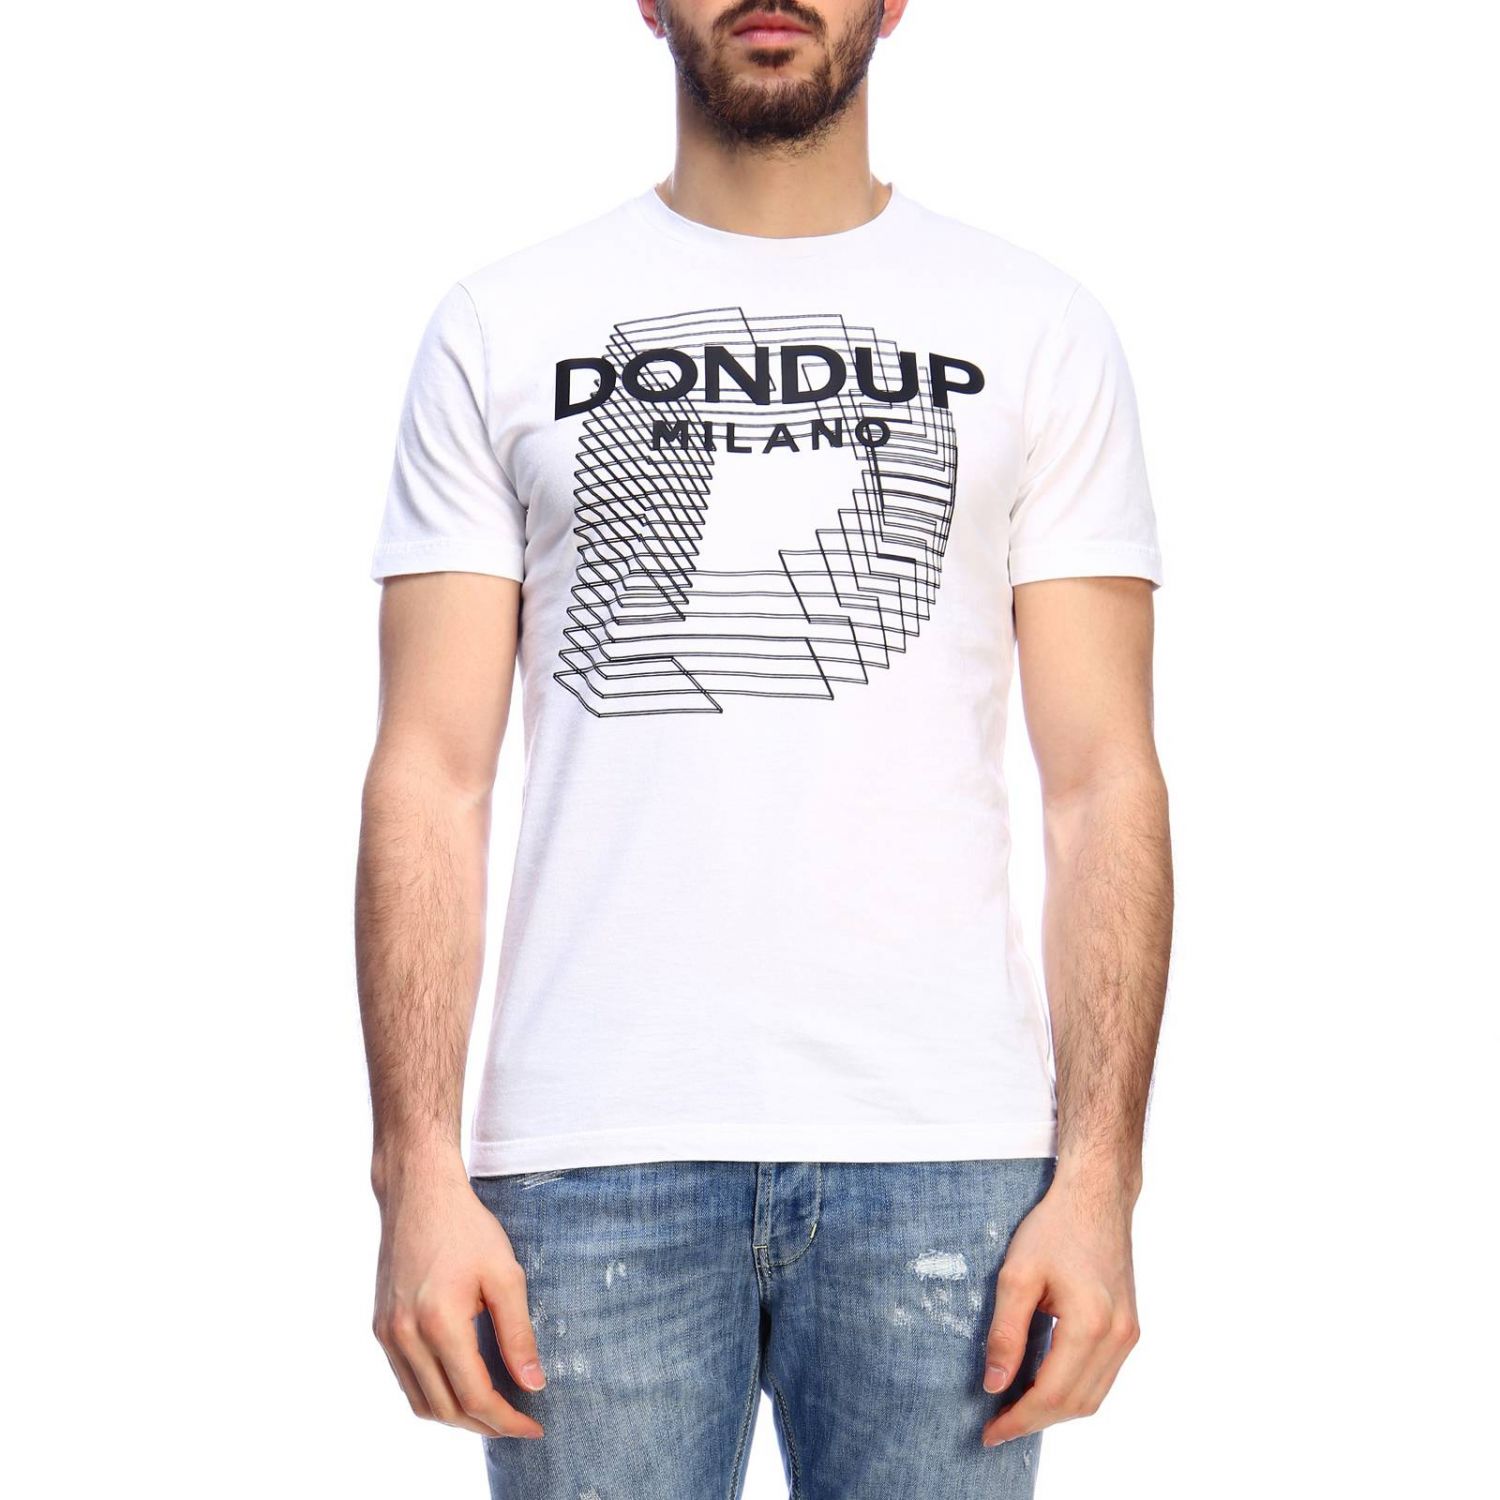 Dondup Outlet: T-shirt men | T-Shirt Dondup Men White | T-Shirt Dondup ...